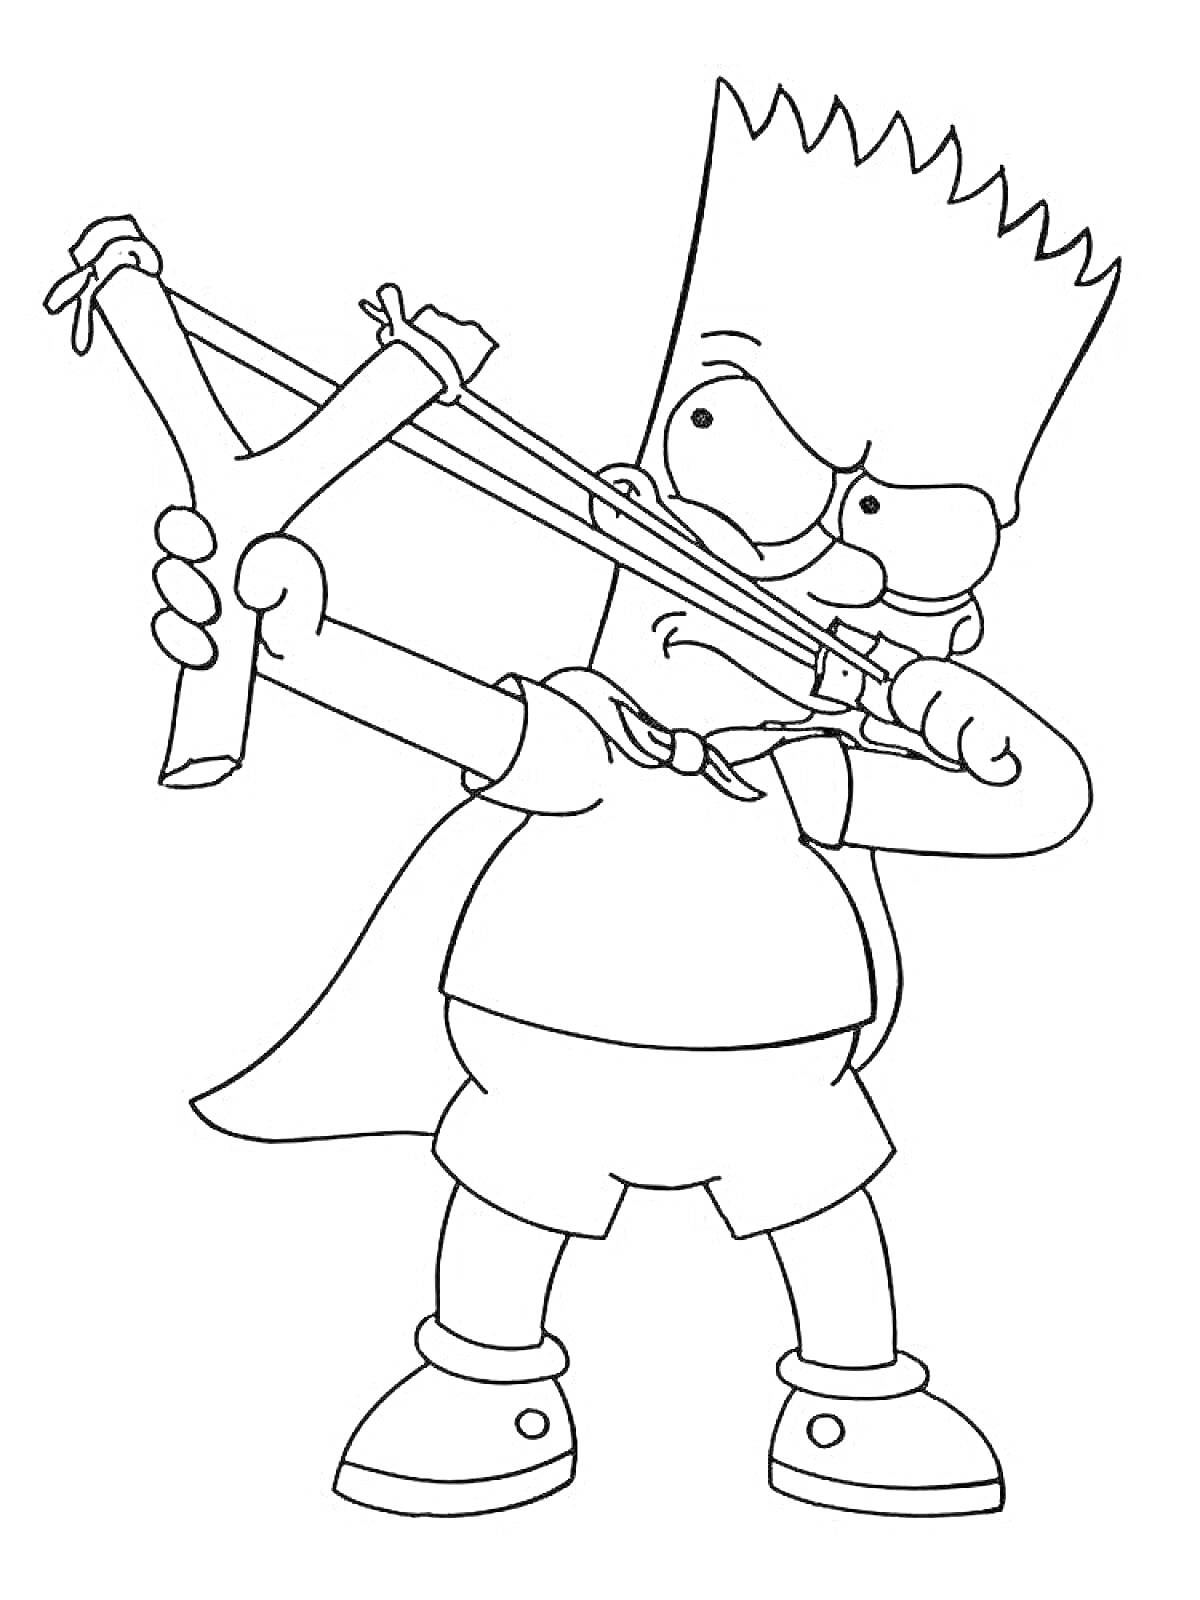 Раскраска Барт Симпсон с рогаткой и в накидке